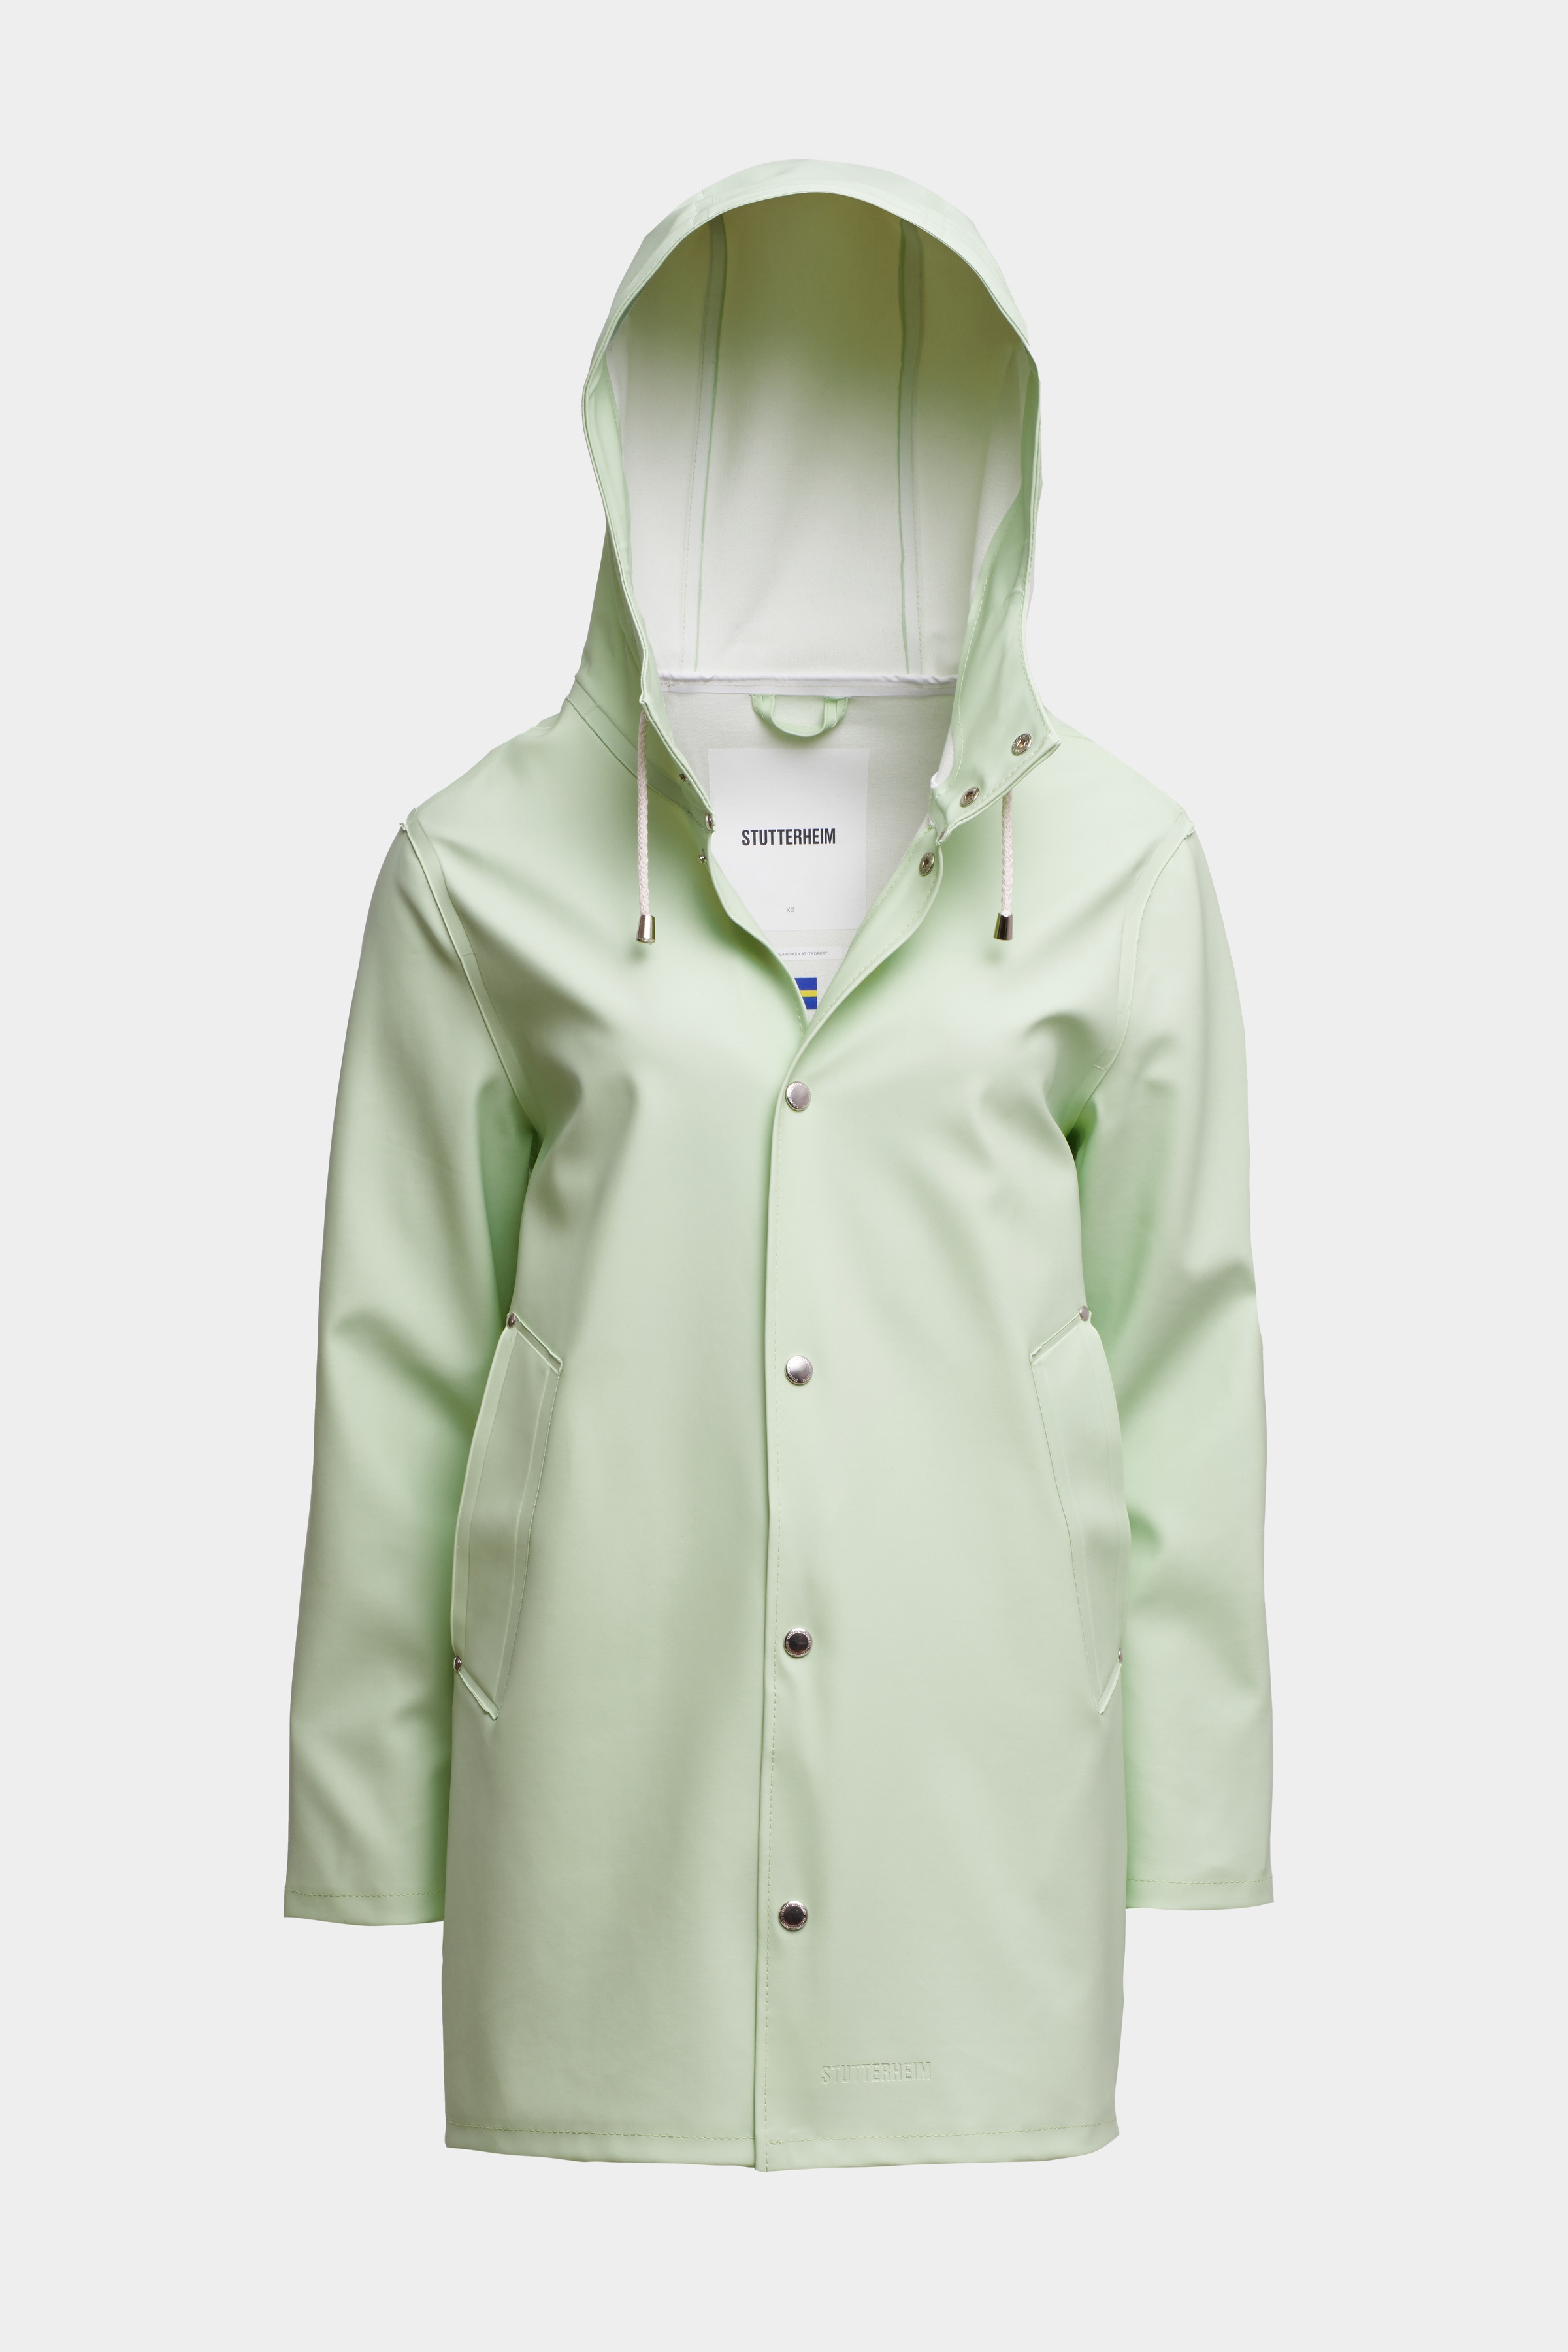 Stockholm Raincoat Seafoam Green - 1